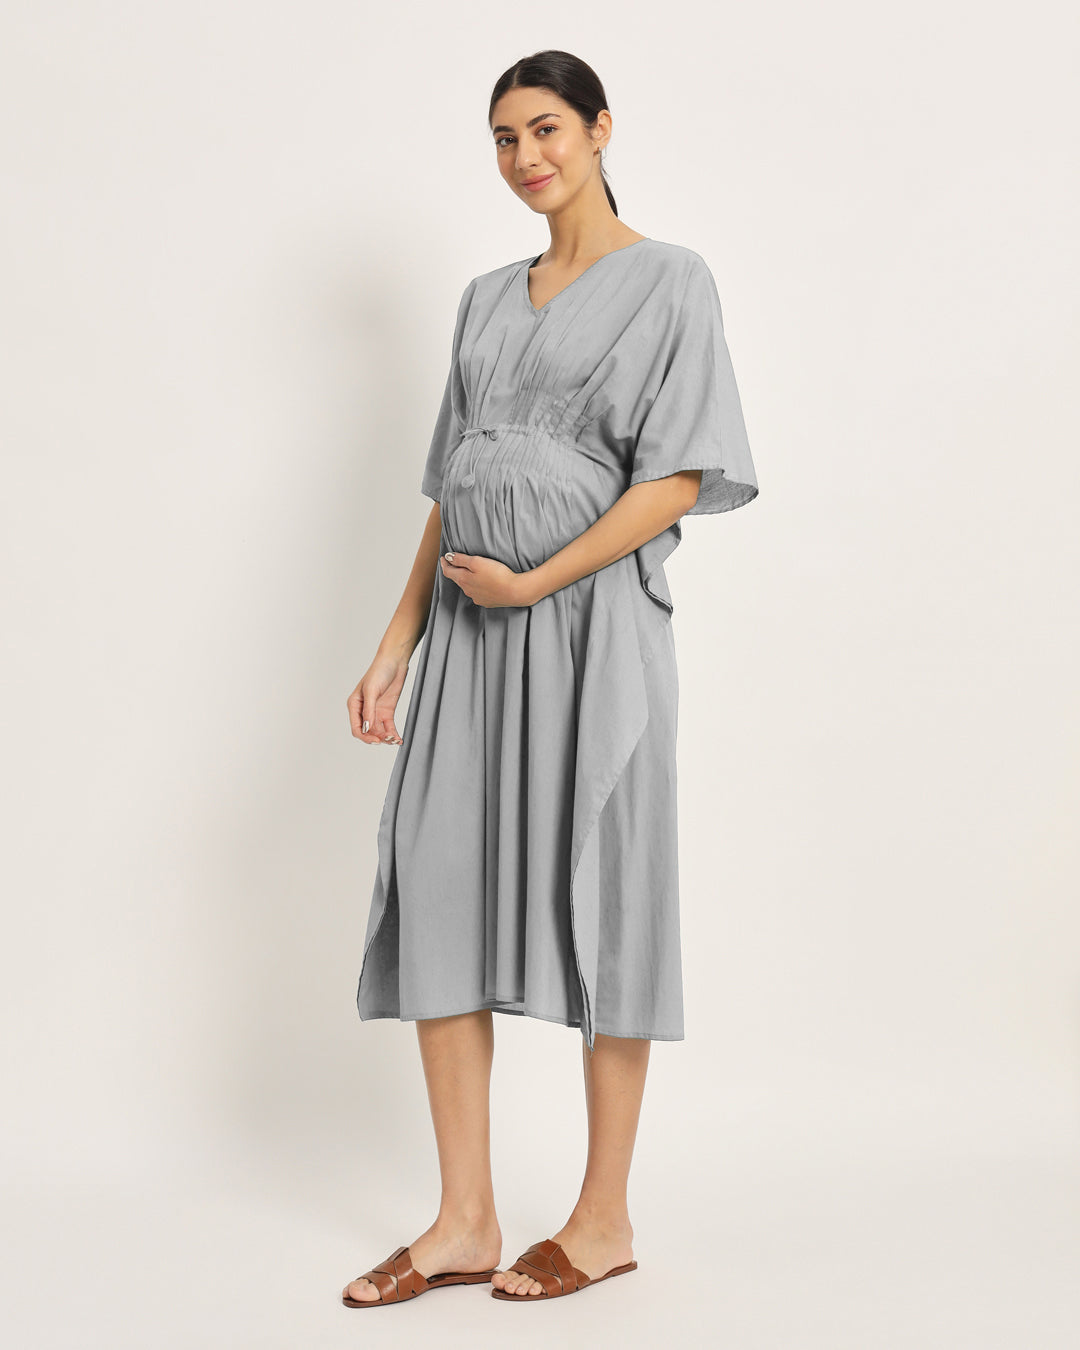 Combo: Iced Grey & Sage Green Mommy Mode Maternity & Nursing Dress